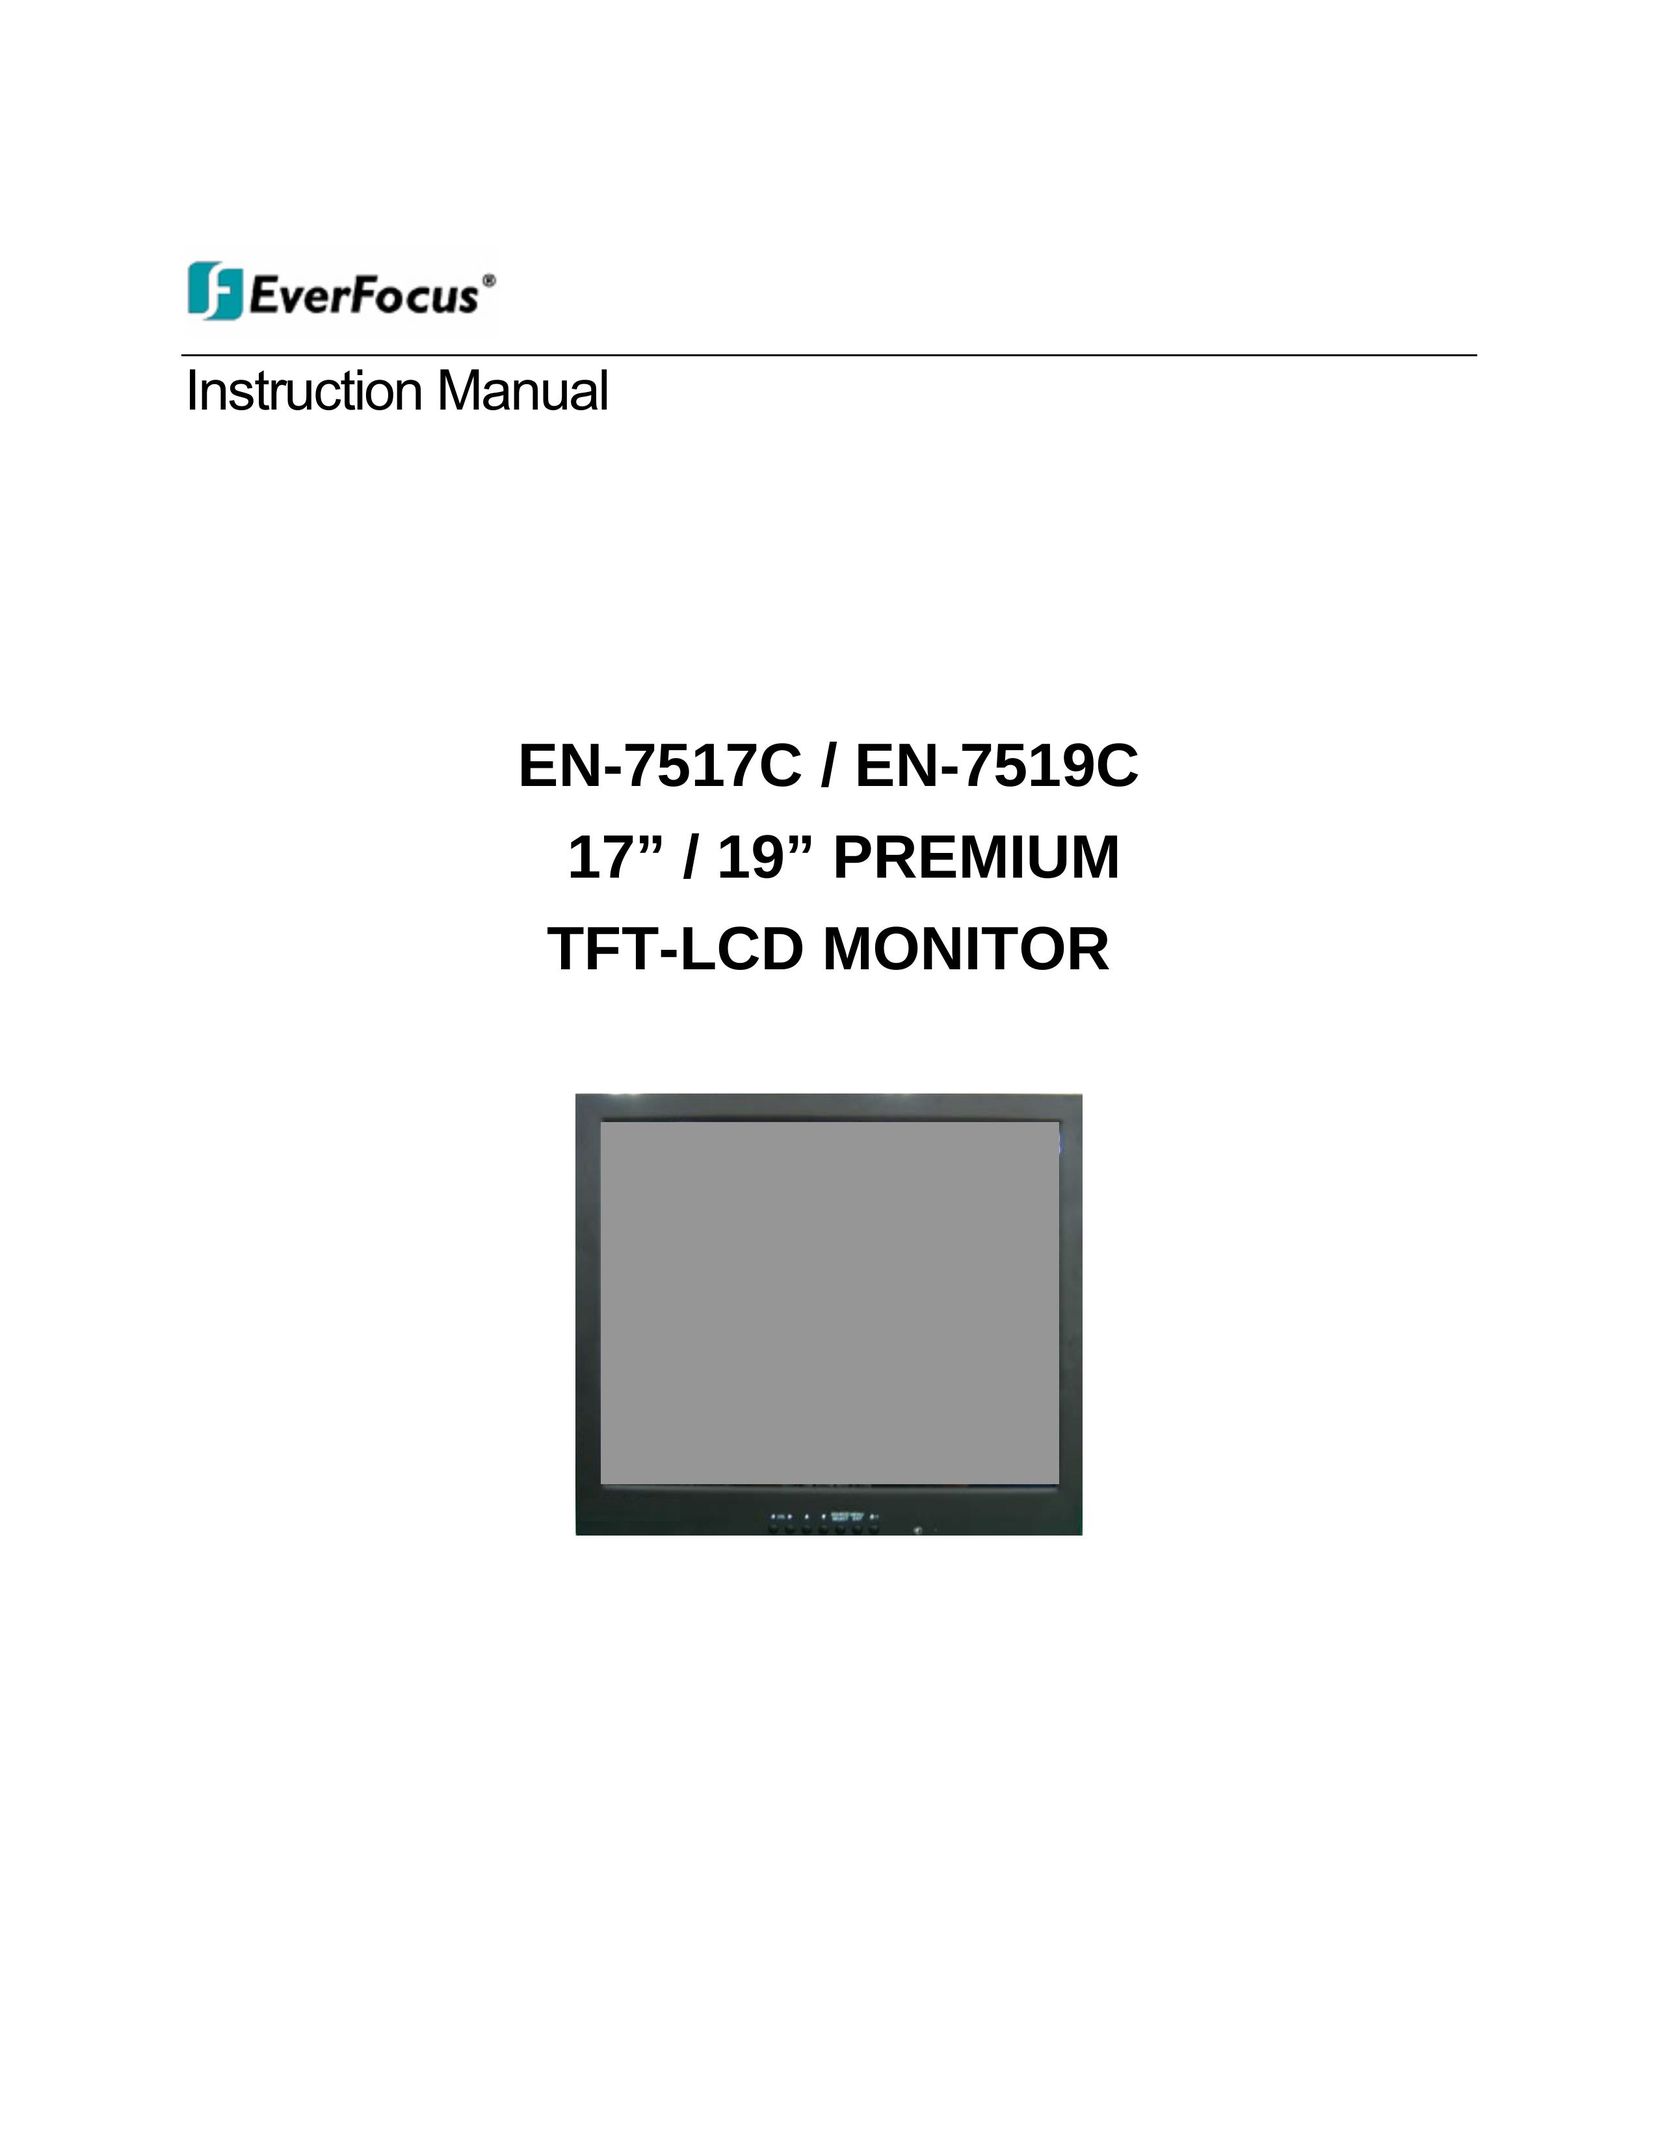 EverFocus EN-7517C Car Video System User Manual